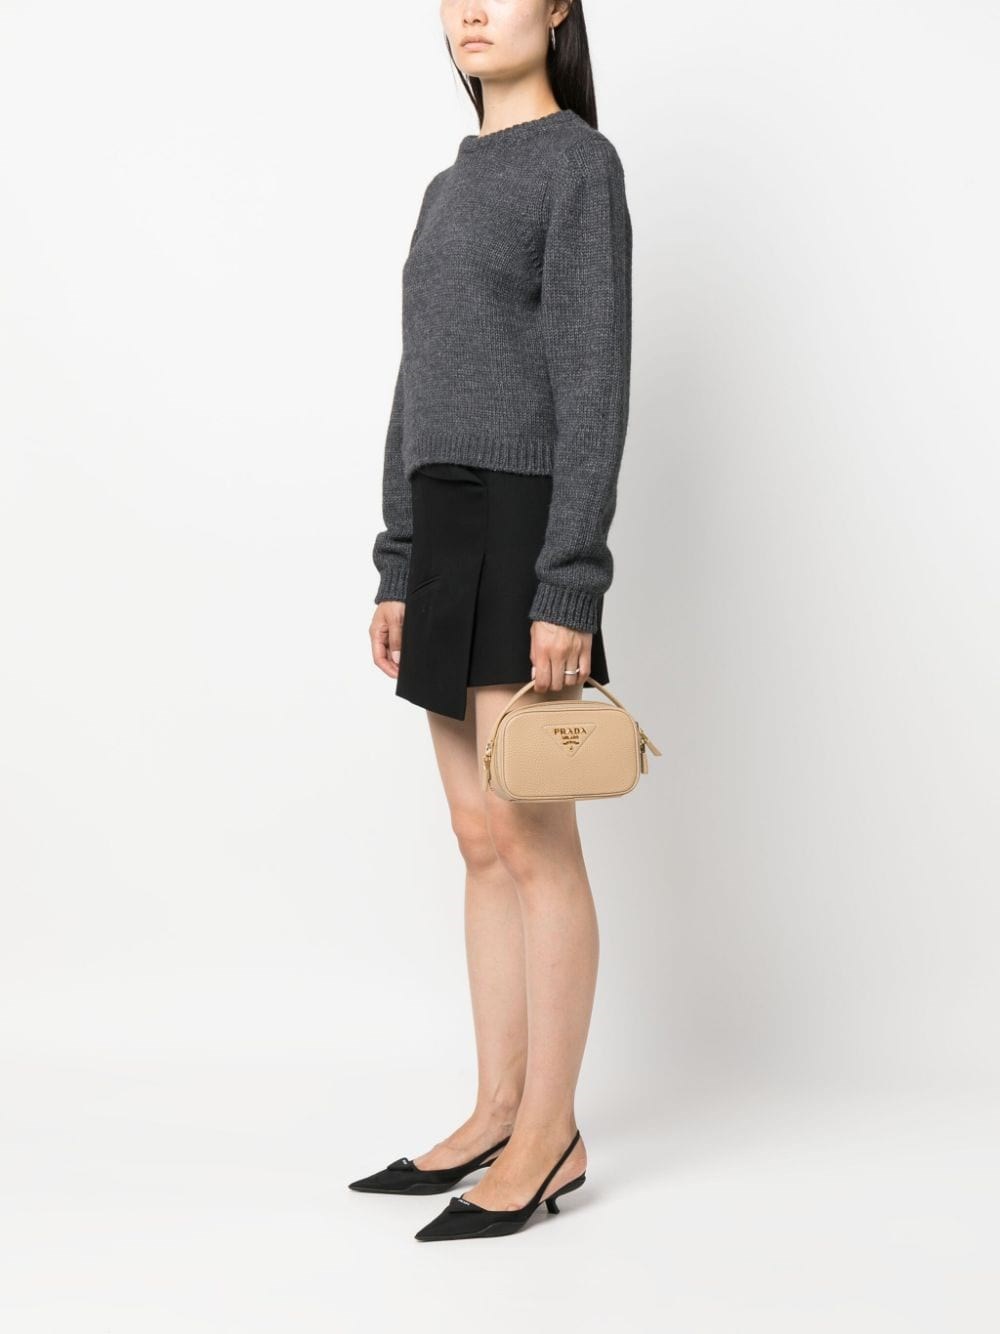 Prada Odette Convertible Belt Bag Saffiano Leather